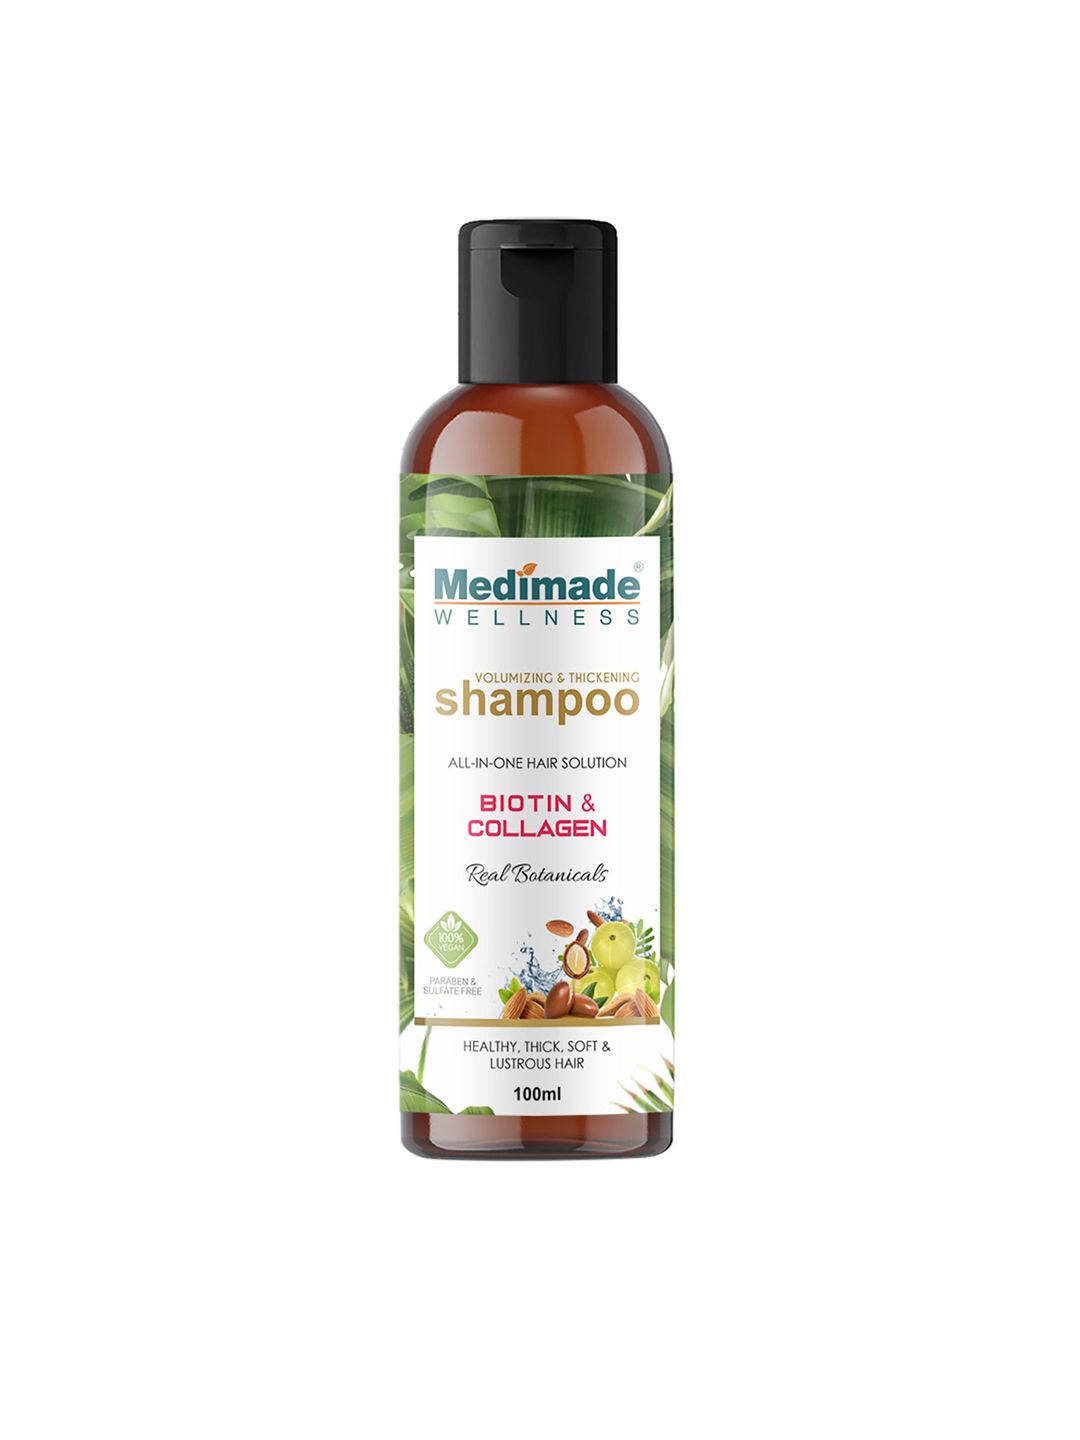 Medimade Volumizing & Thickening Shampoo with Biotin & Collagen Price in India